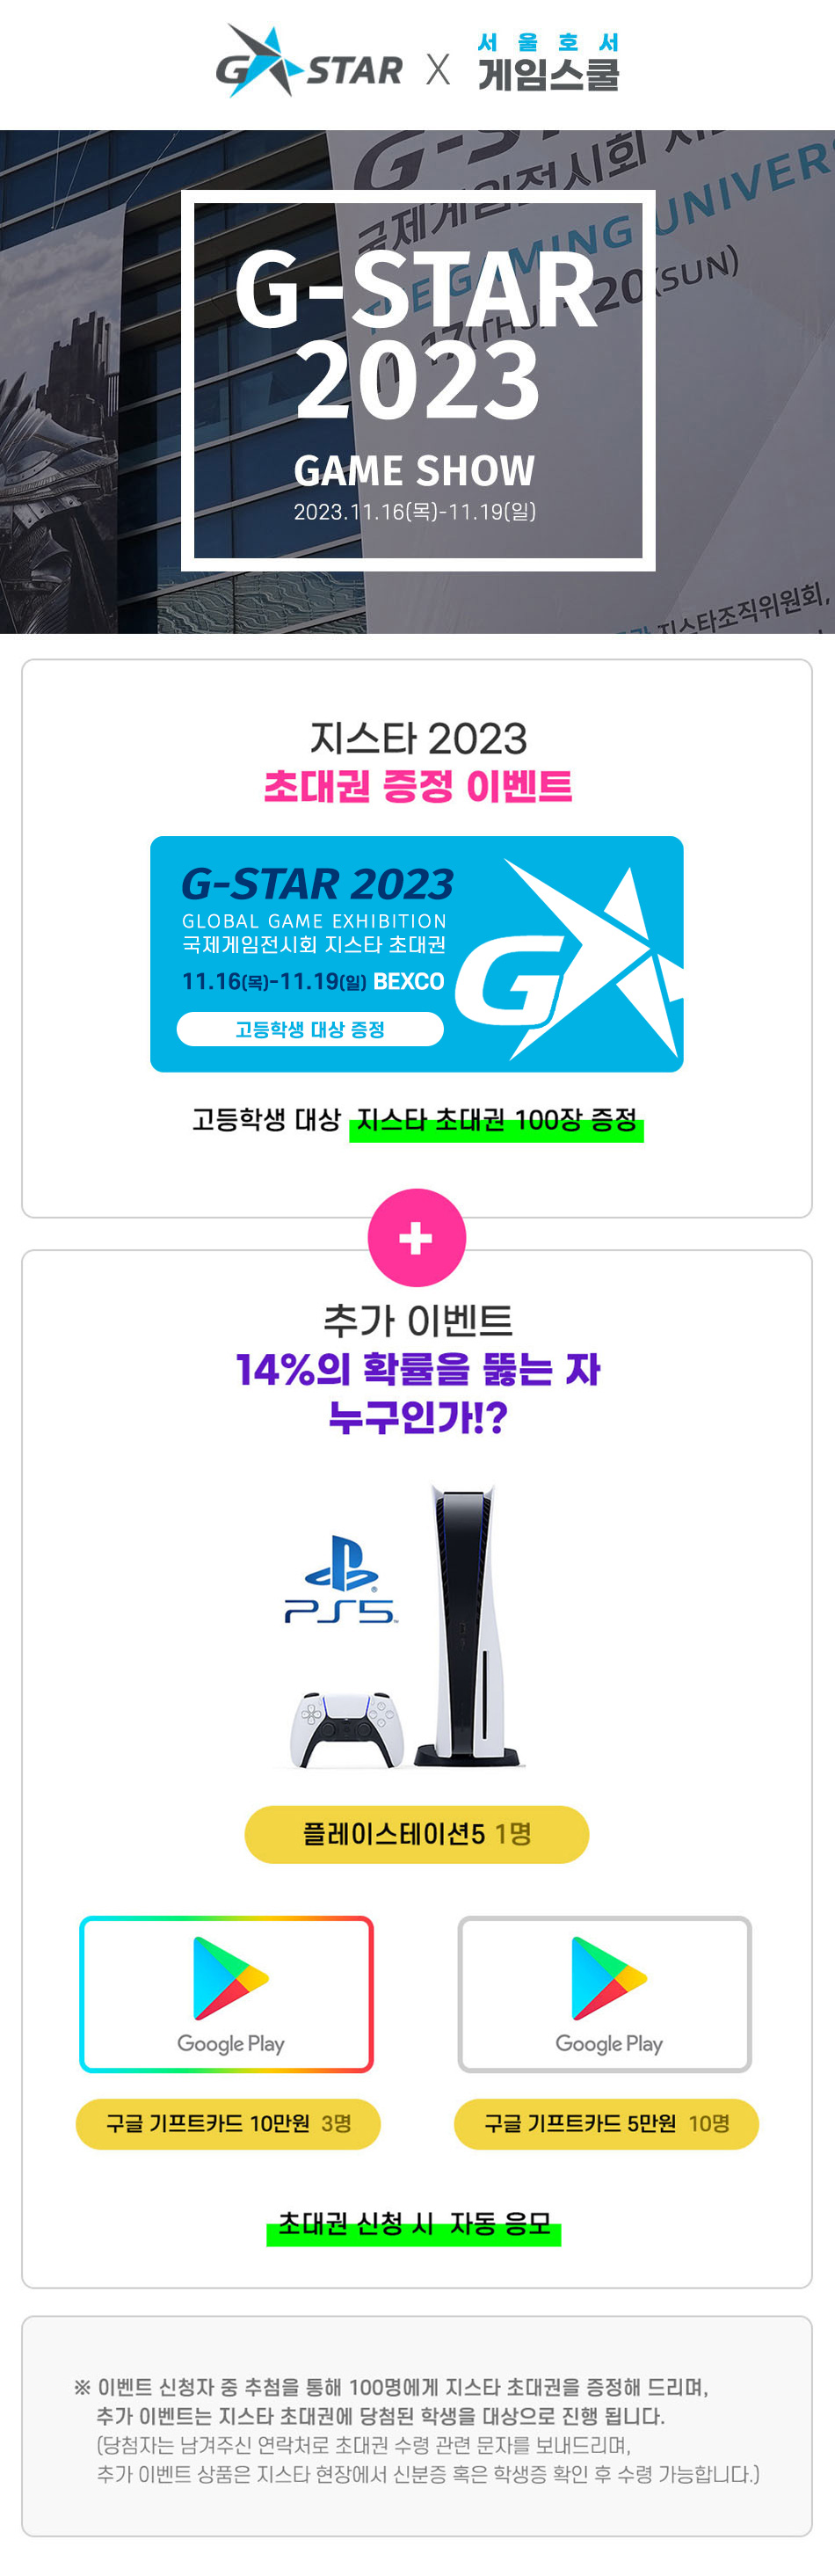 G-STAR 2023 GAME SHOW 고등학생 대상 지스타 초대권 증정 이벤트